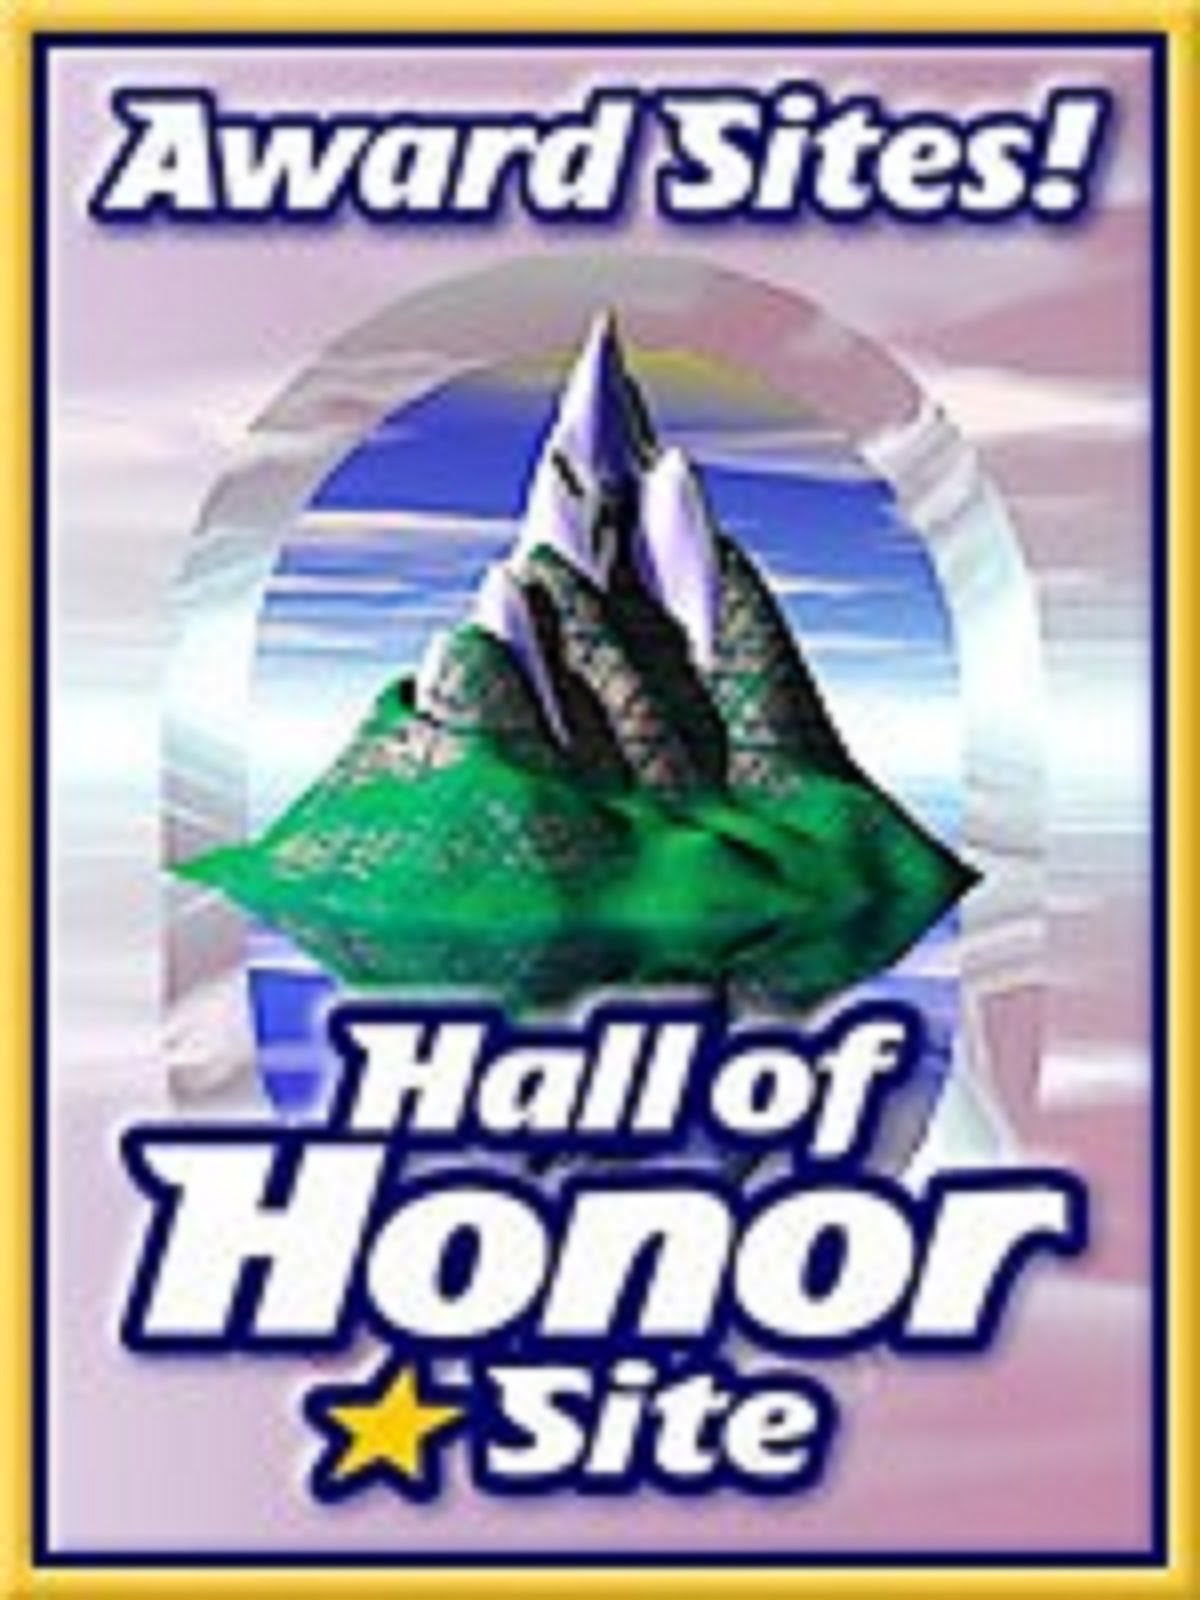 STARS N'  STRIPES - HALL OF HONOR  HONOR AWARD SITE BADGE